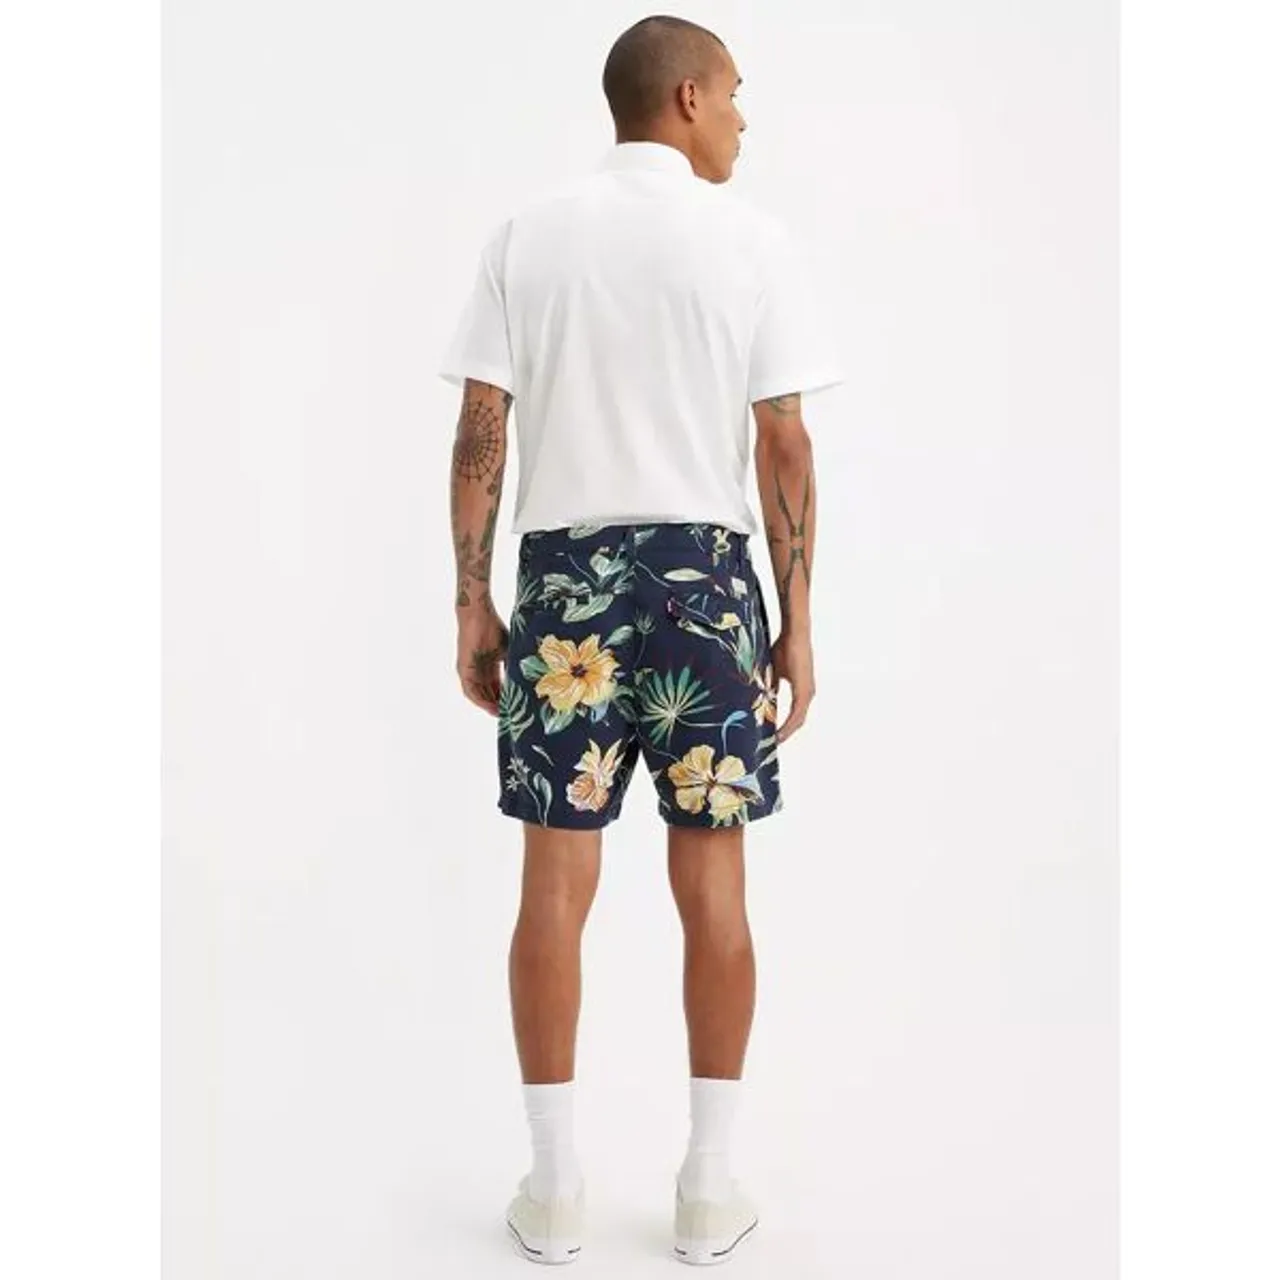 Levi's Authentic Chino Shorts, Navy/Multi - Navy/Multi - Male